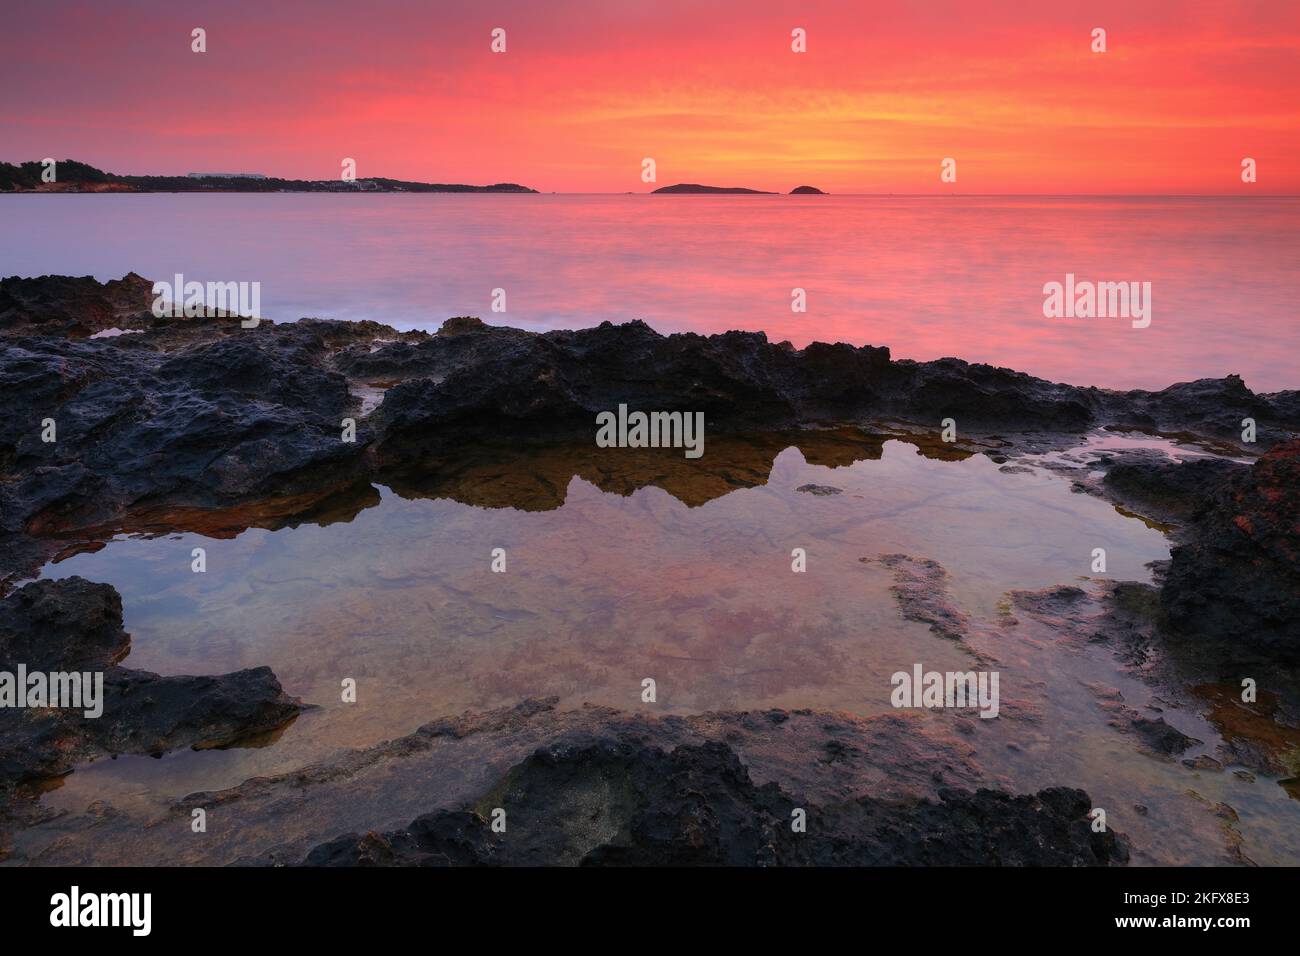 Sunrise at Bombay Beach, Santa Eulalia, Ibiza, Balearic Islands, Spain, Europe. Stock Photo